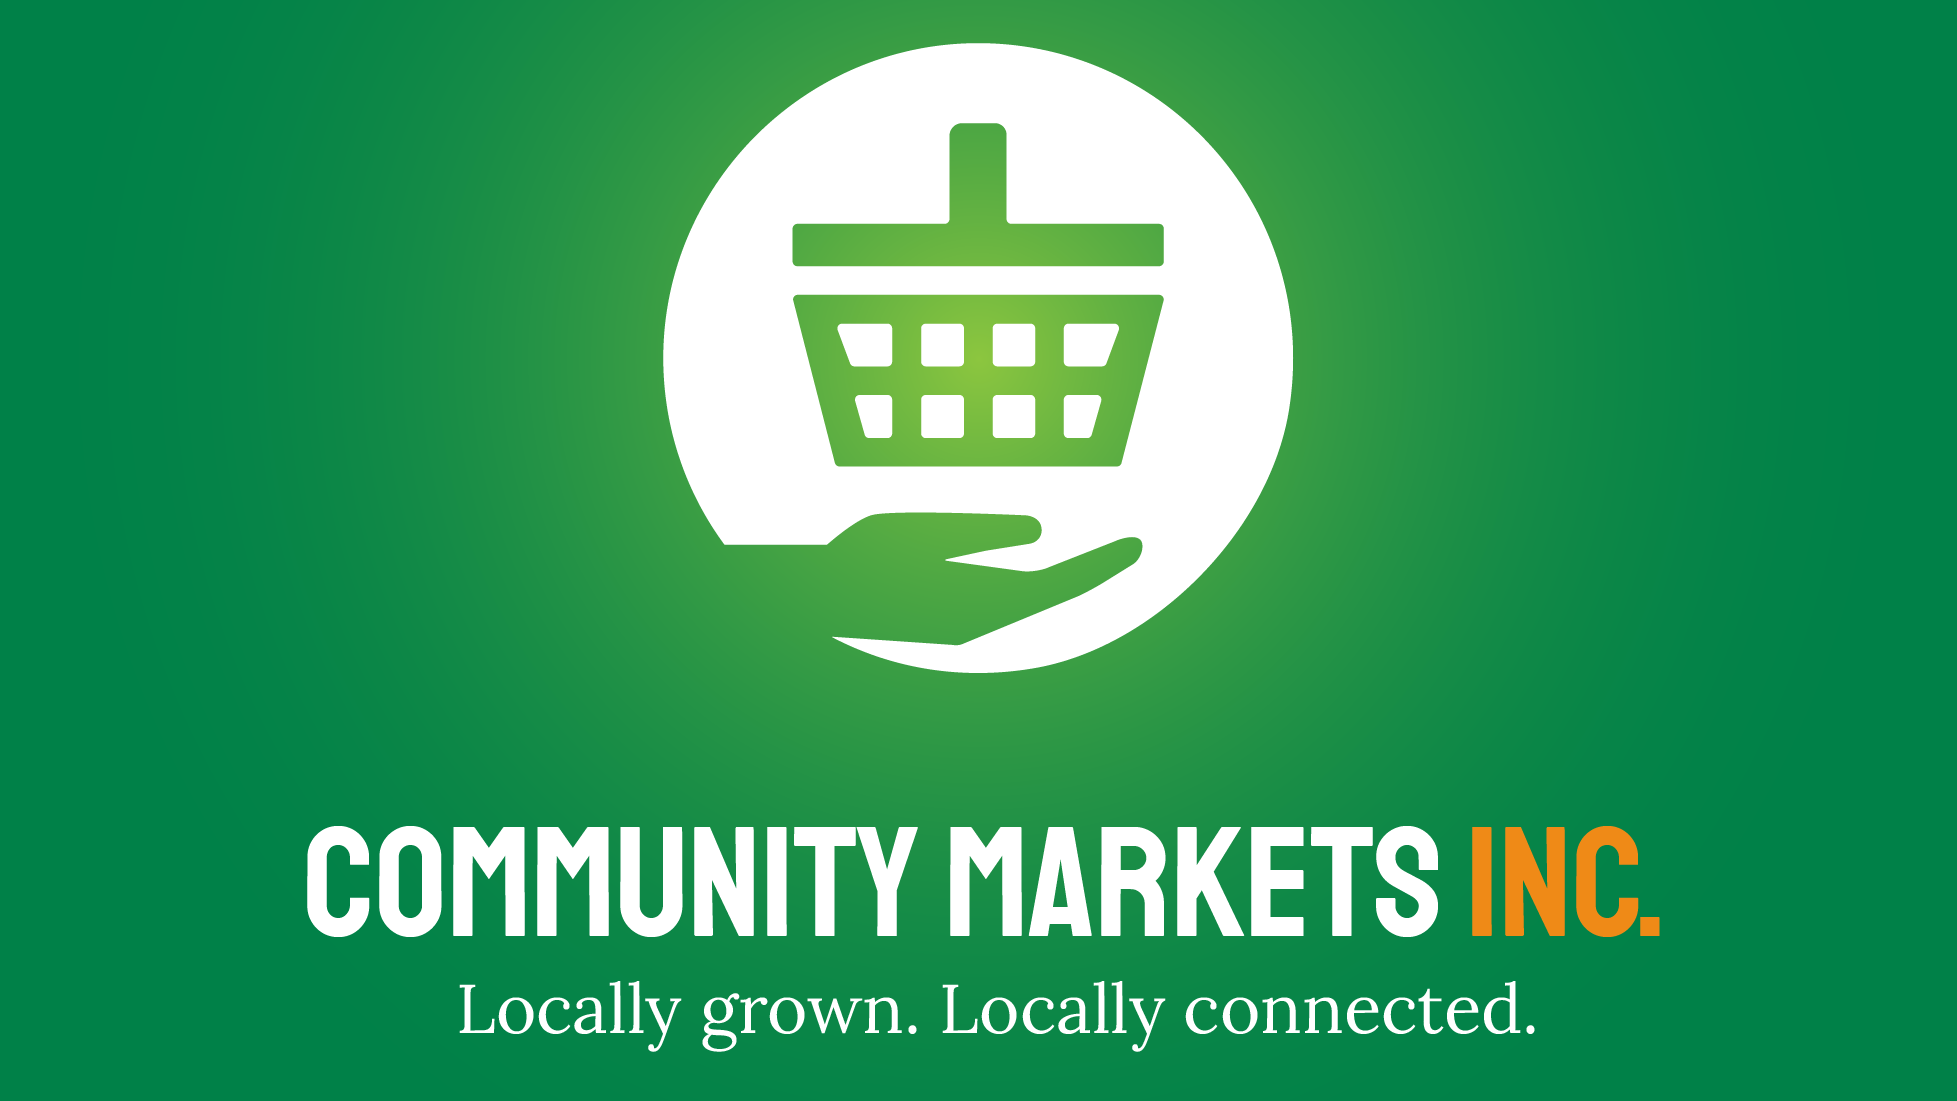 Community Markets Inc. Website